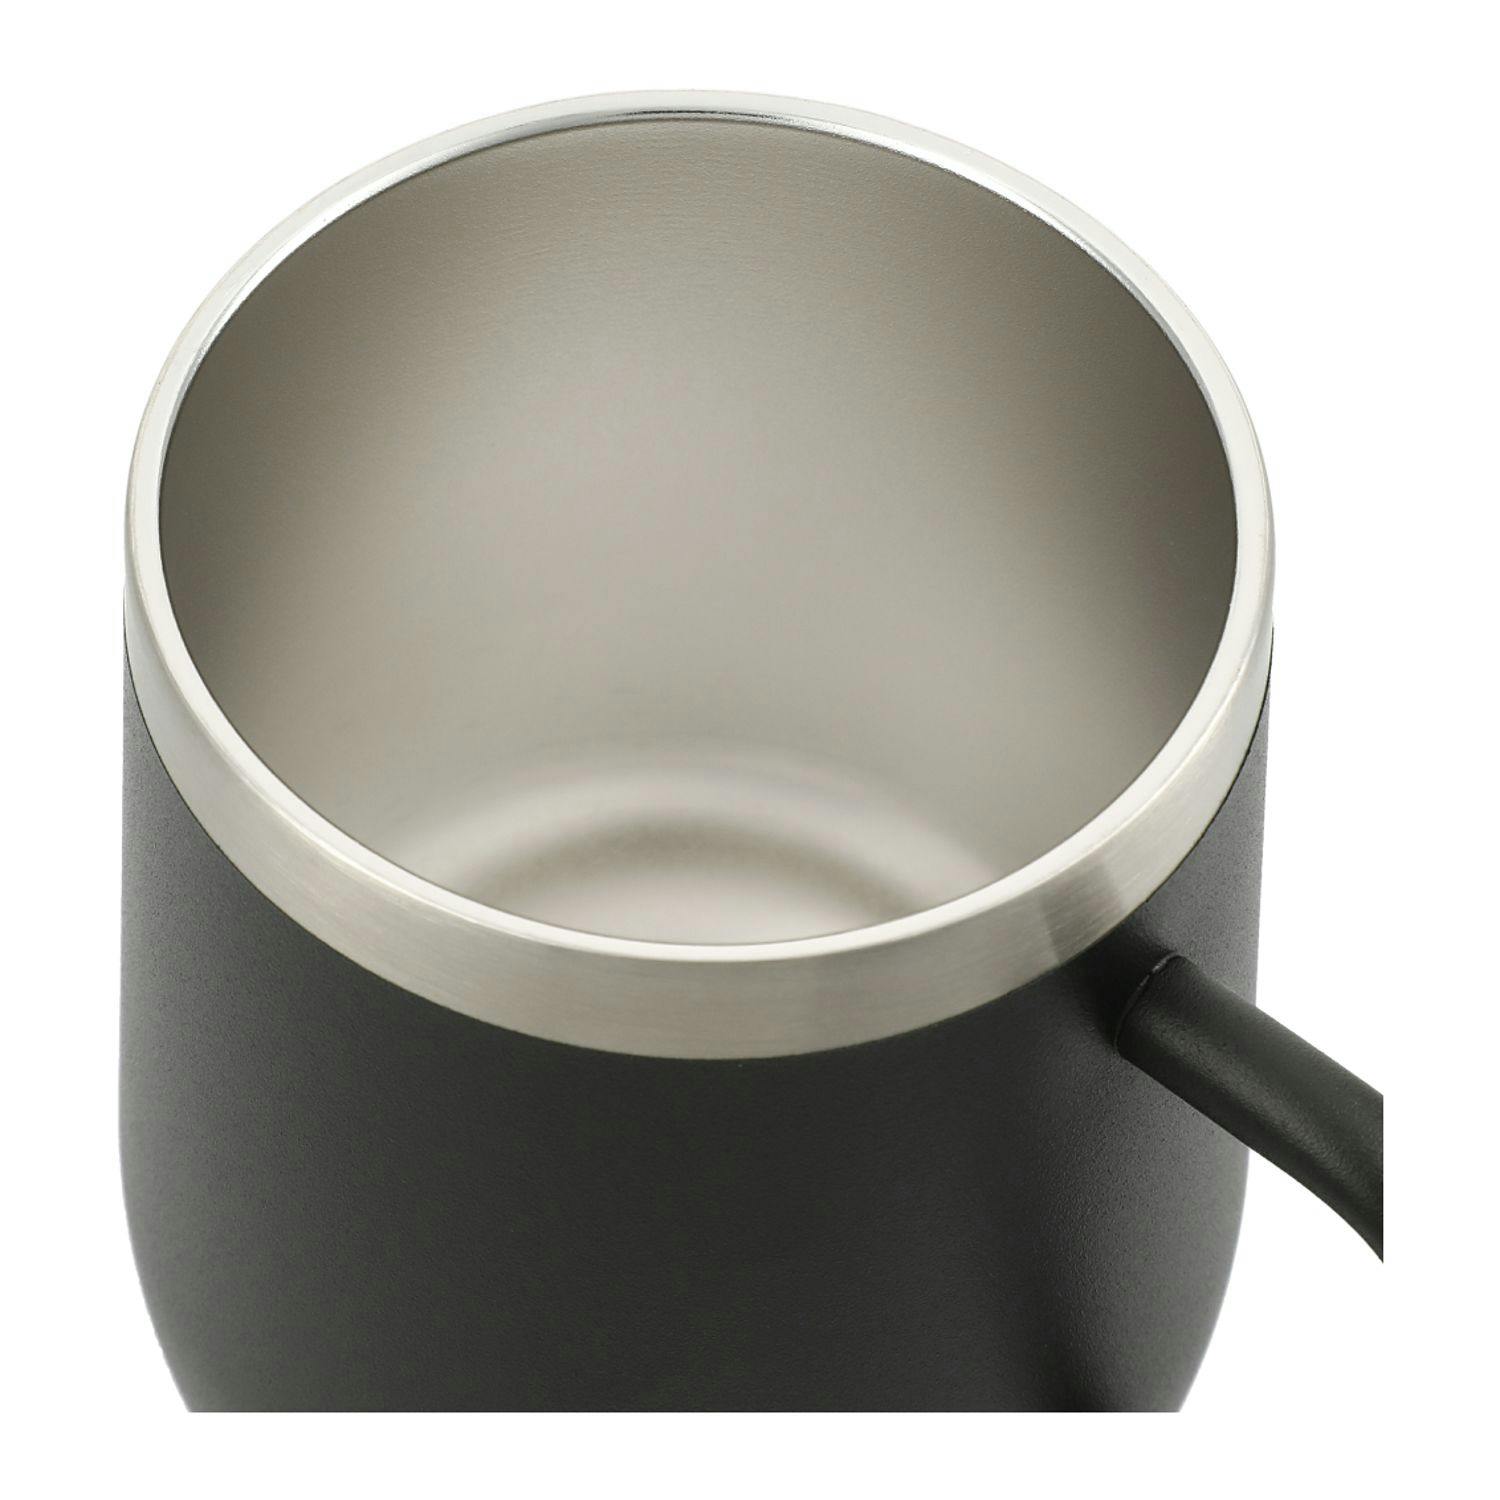 Brew Copper Vacuum Insulated Mug 12oz - additional Image 3